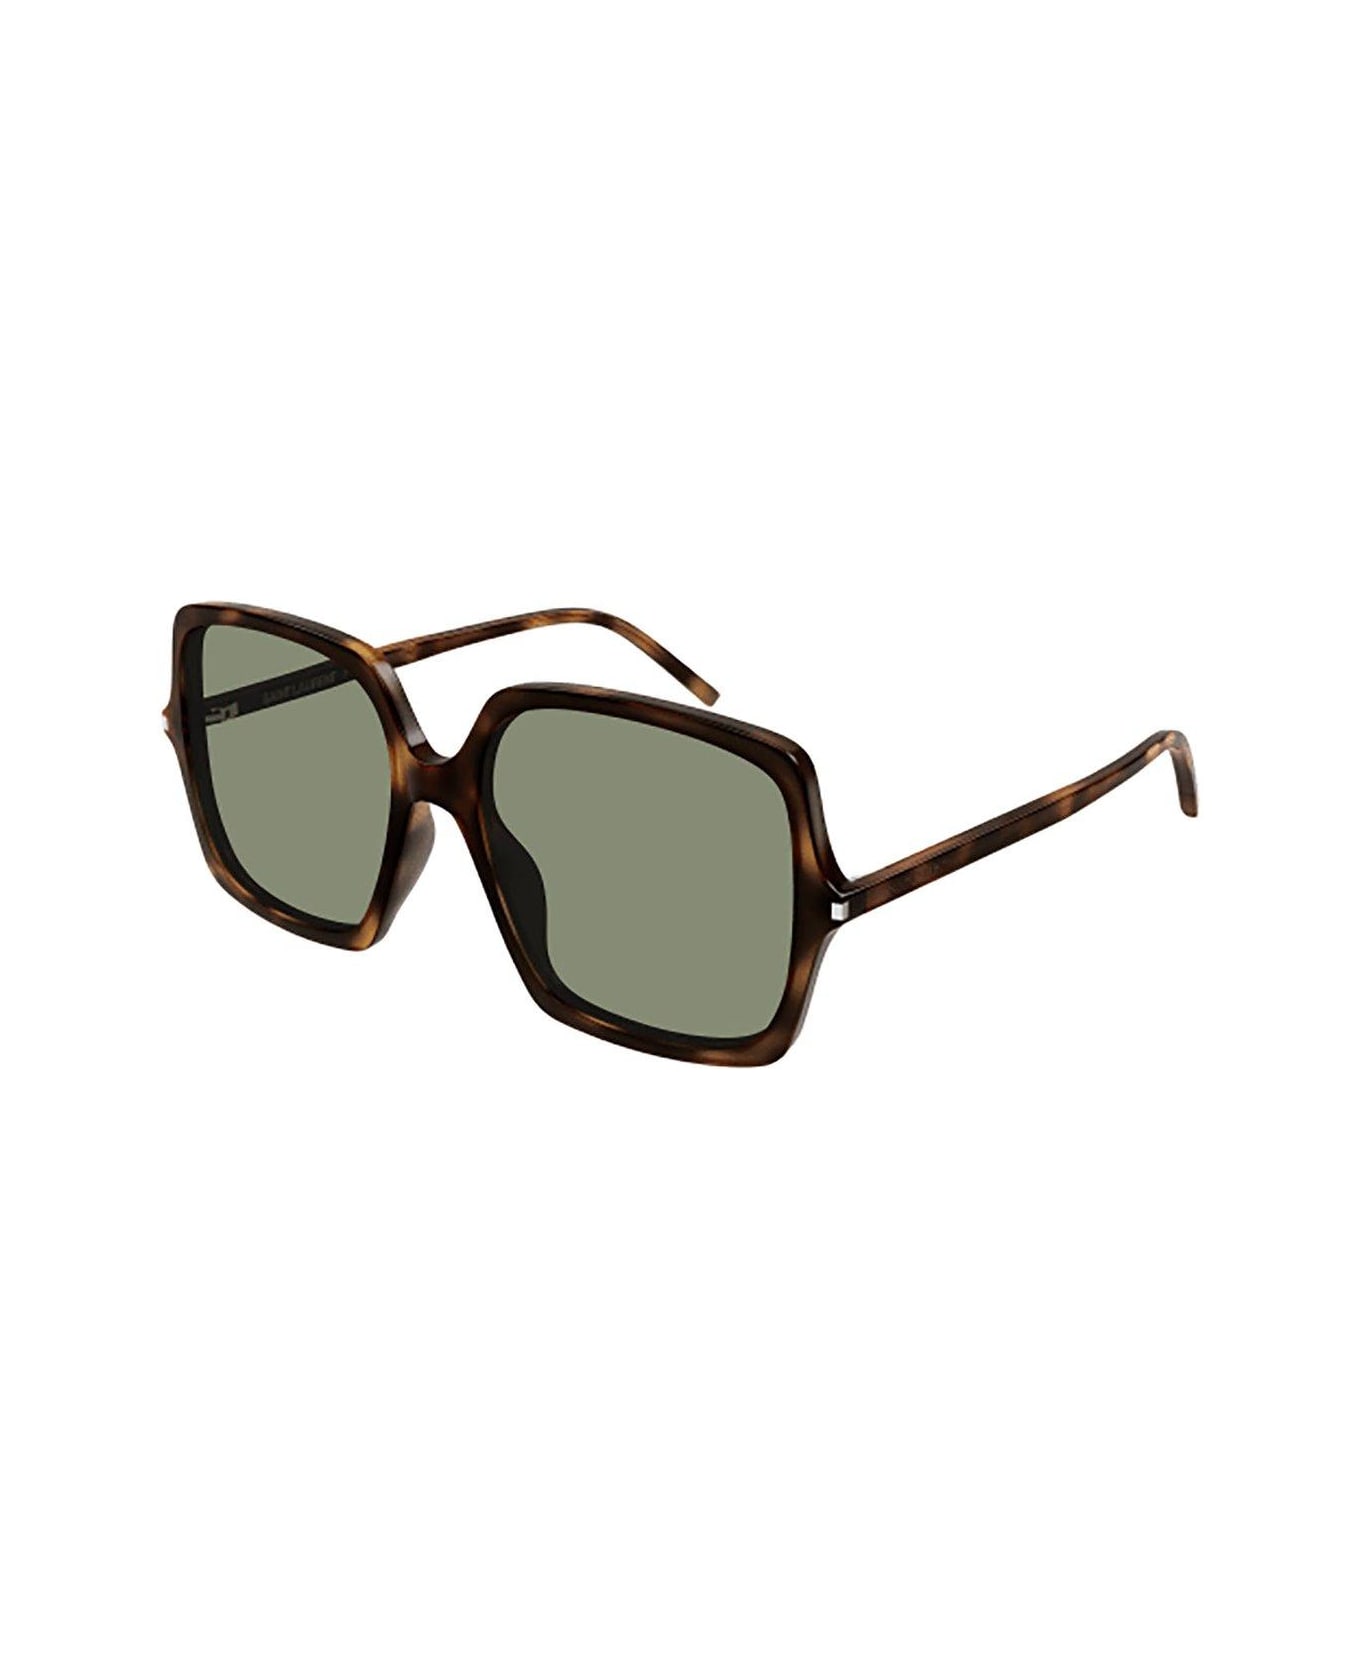 Saint Laurent Eyewear Square Frame Sunglasses - 002 havana havana green